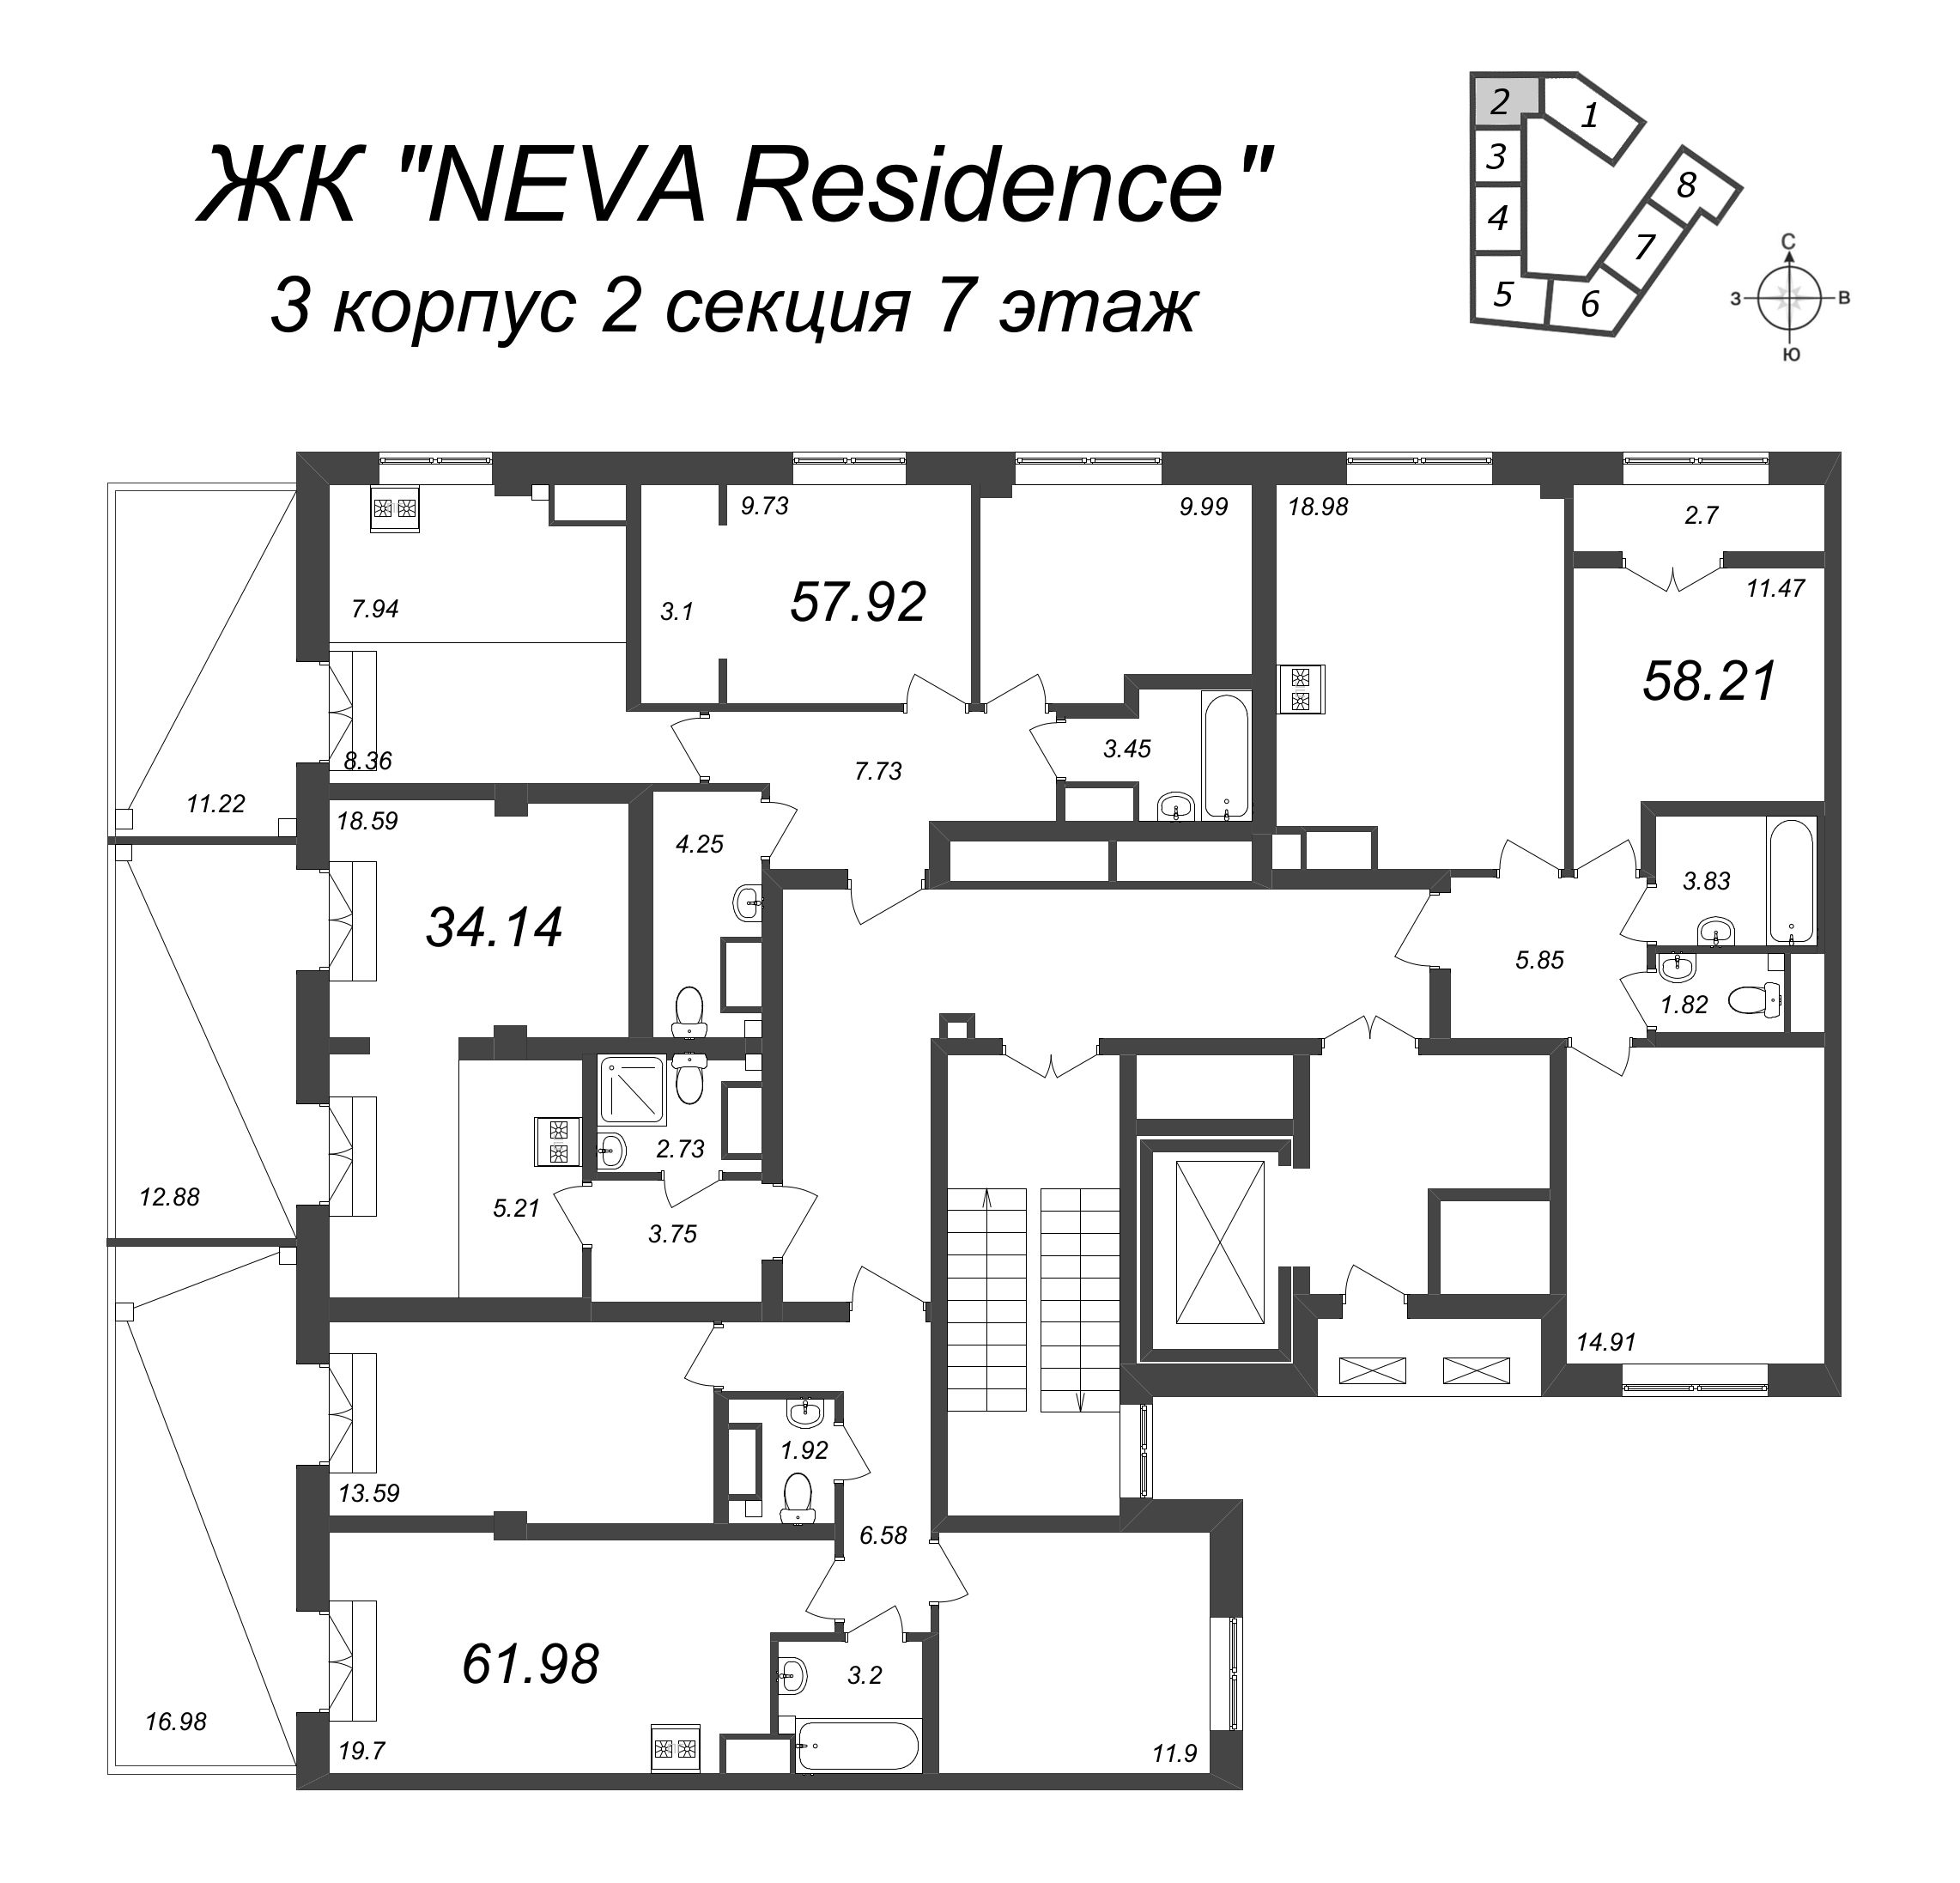 3-комнатная (Евро) квартира, 61.98 м² - планировка этажа